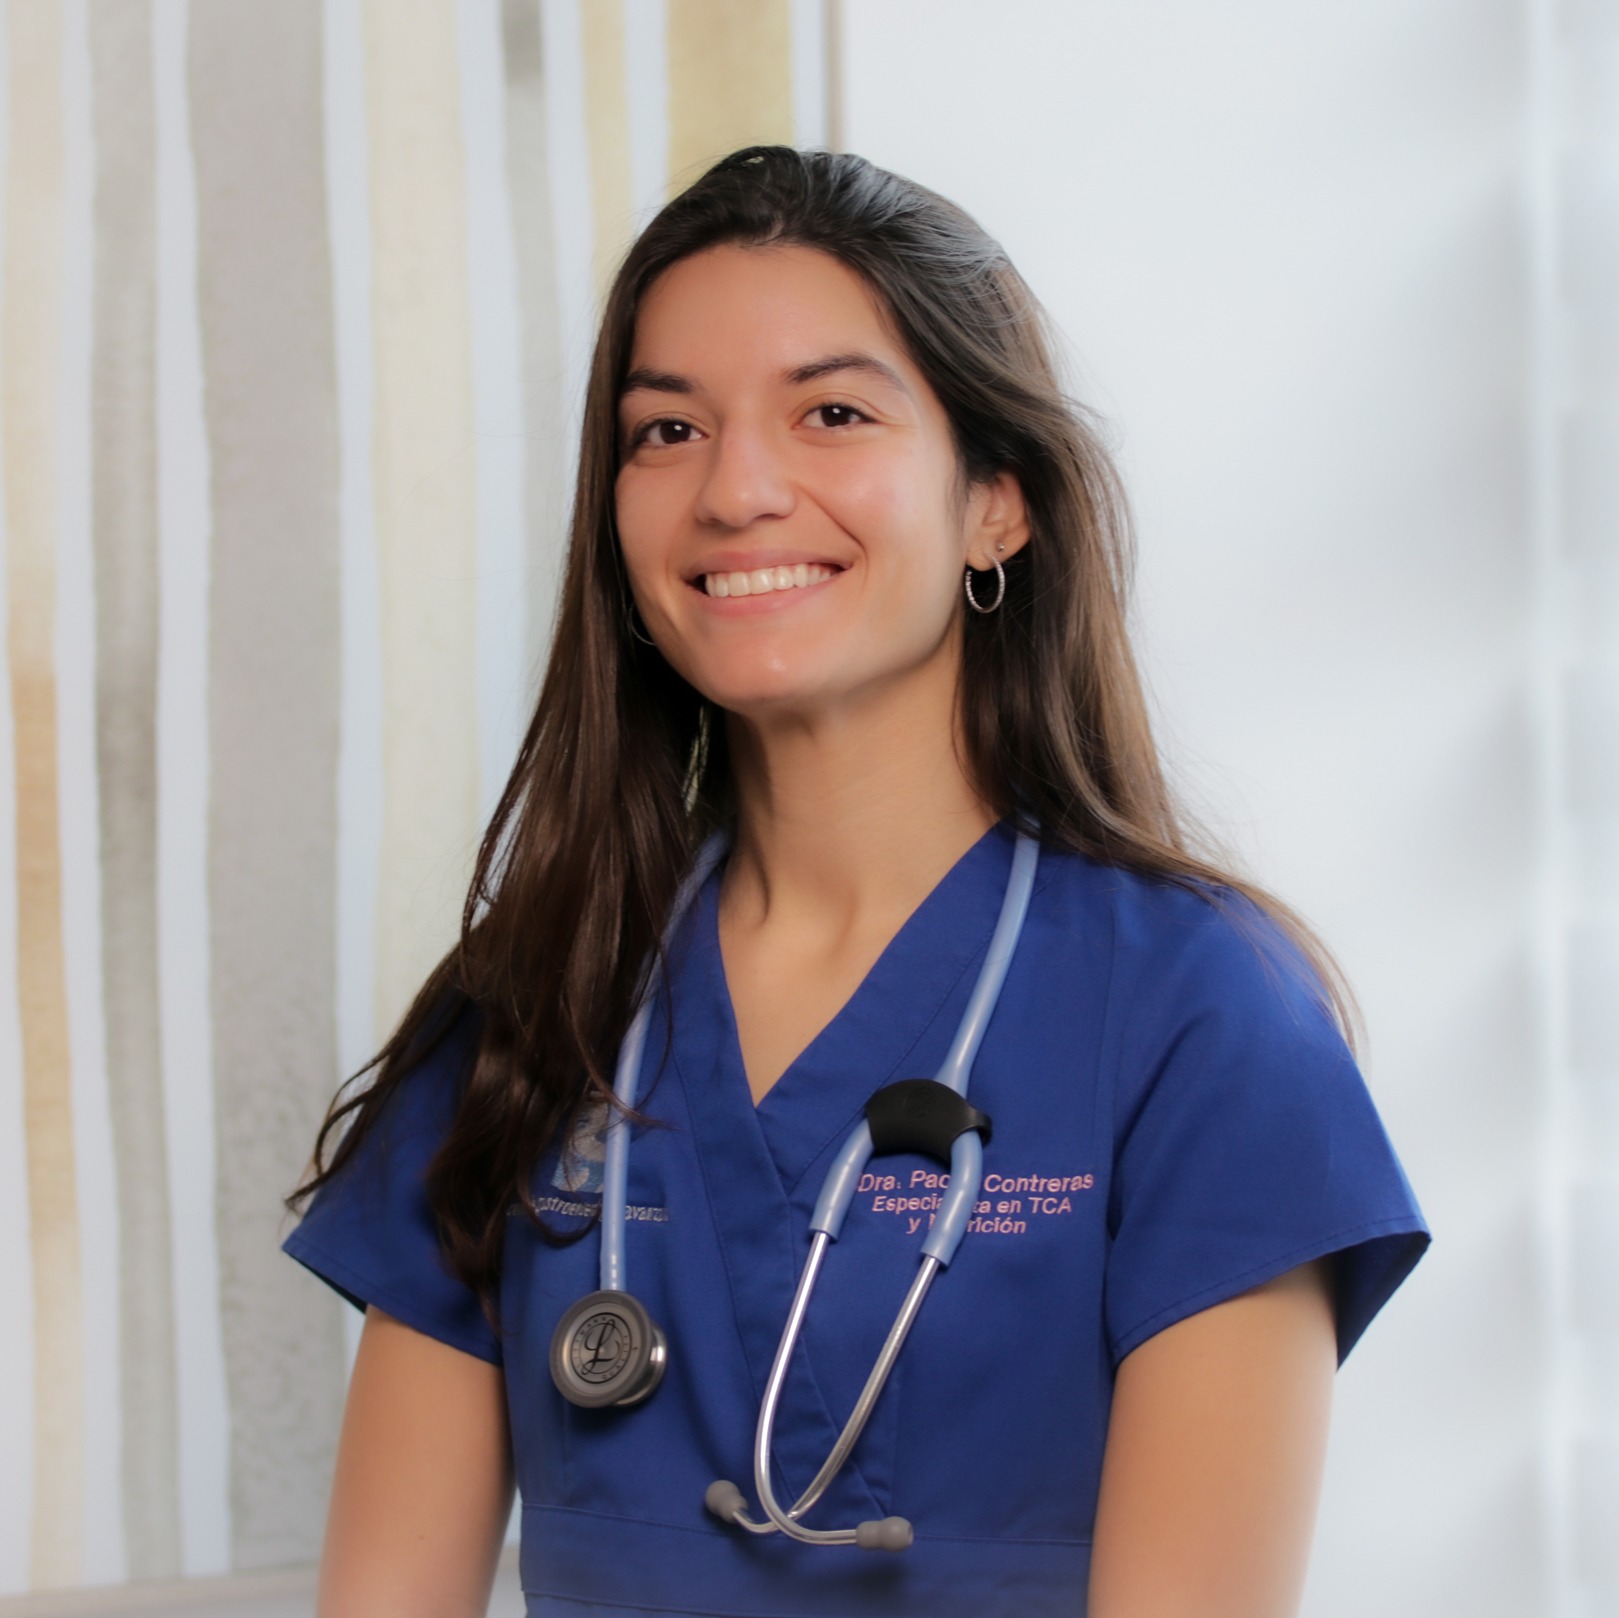 Dra.-Paola-Contreras-2